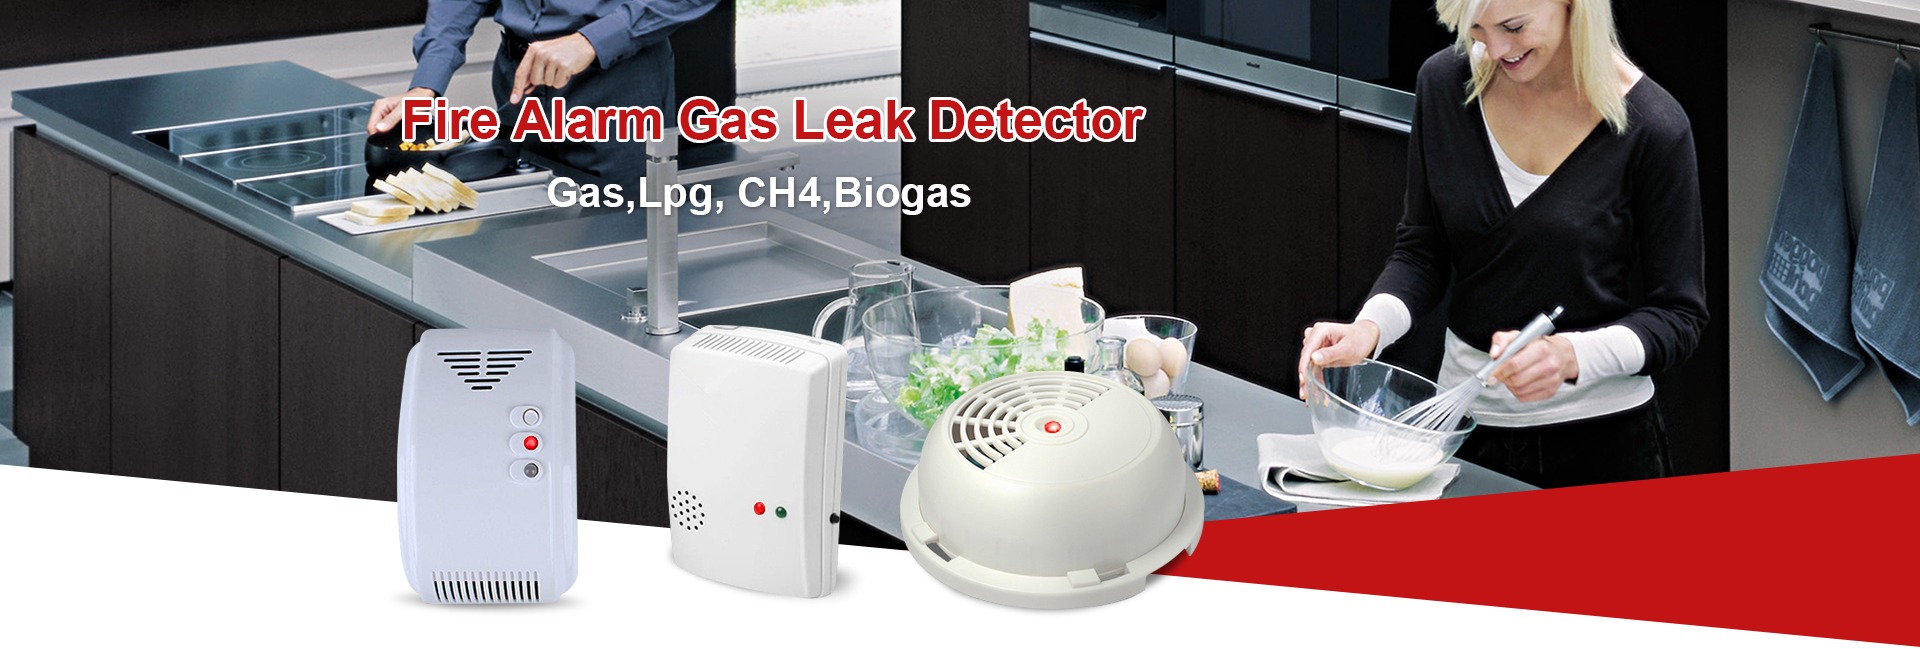 Independent LPG Gas Detector in Alarm AC220V Gas Leak Sensor Kitchen Gas Detector Price For Home Sec